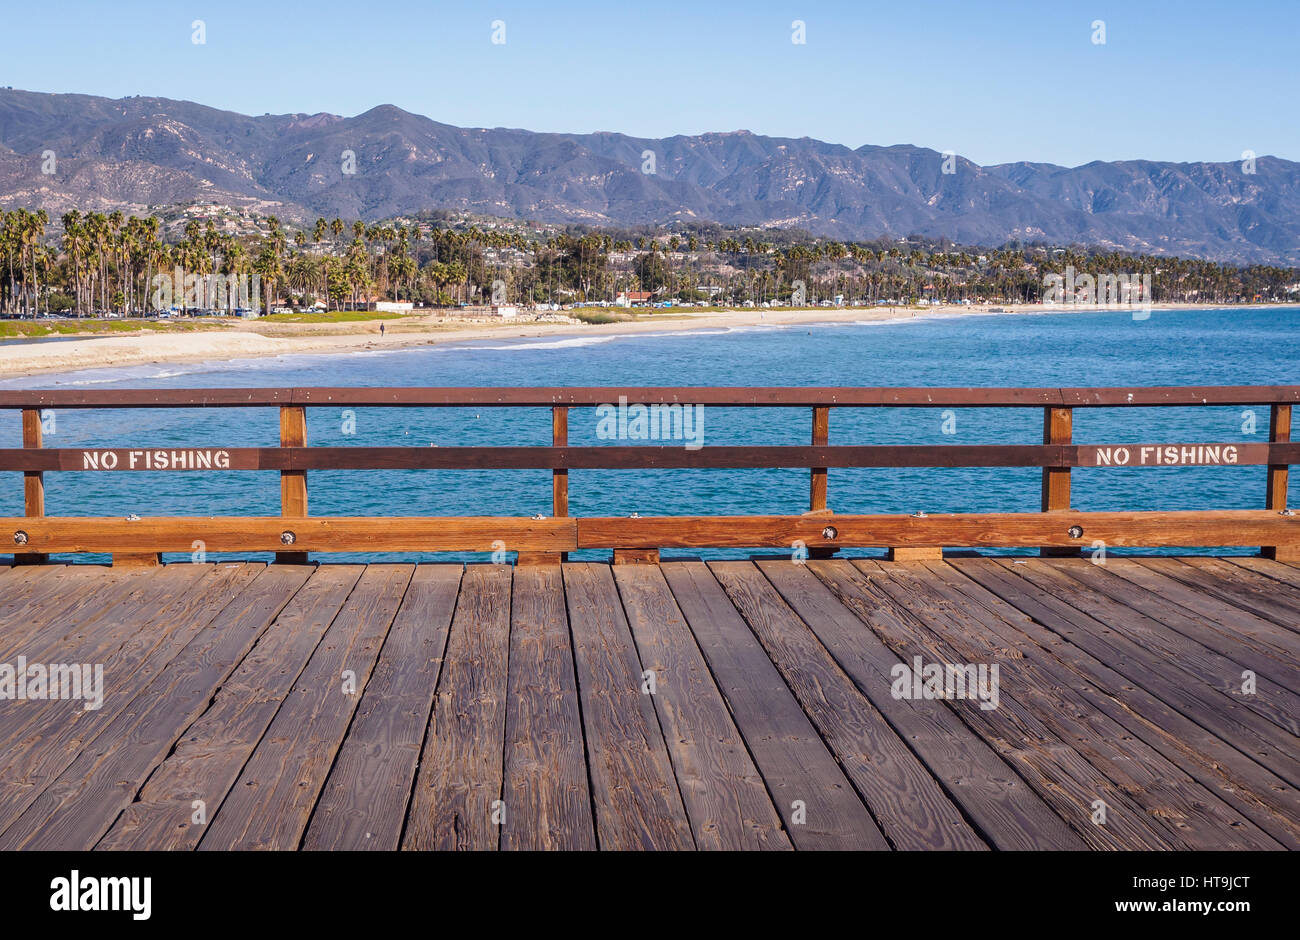 No Fishing sign on a boardwalk in picturesque Santa Barbara, California Stock Photo